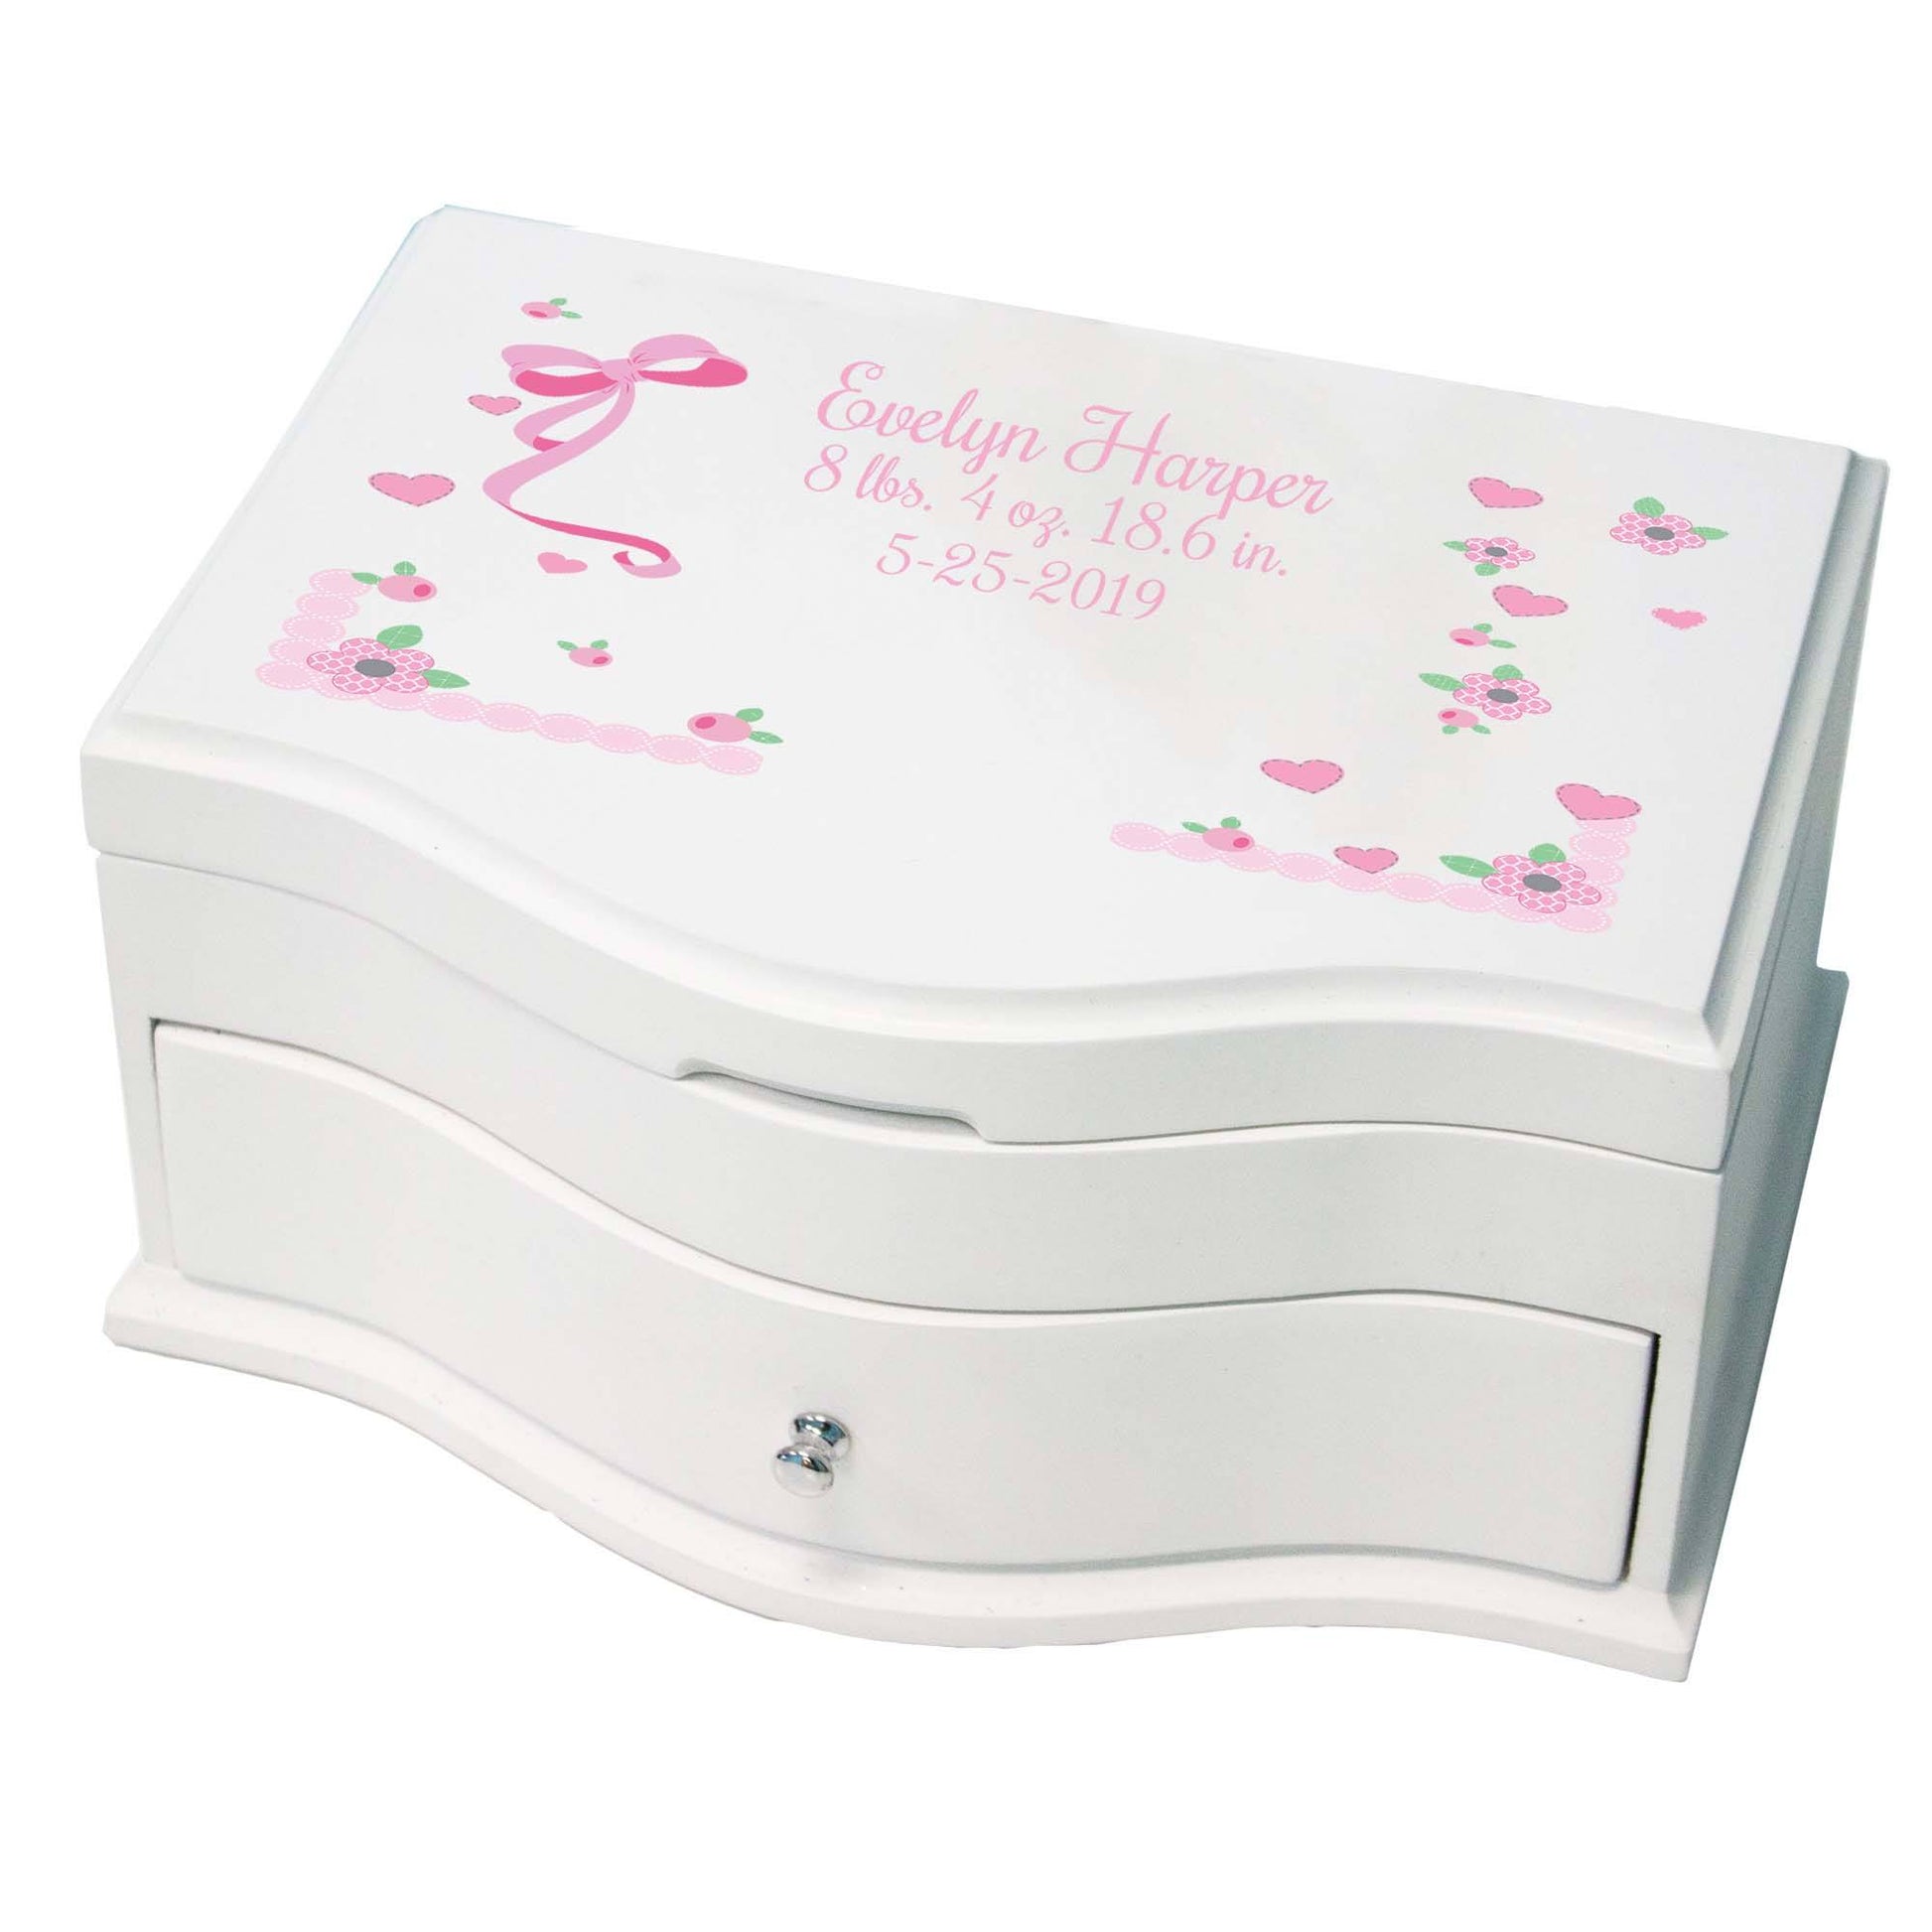 Princess Girls Jewelry Box with Pink Bow design